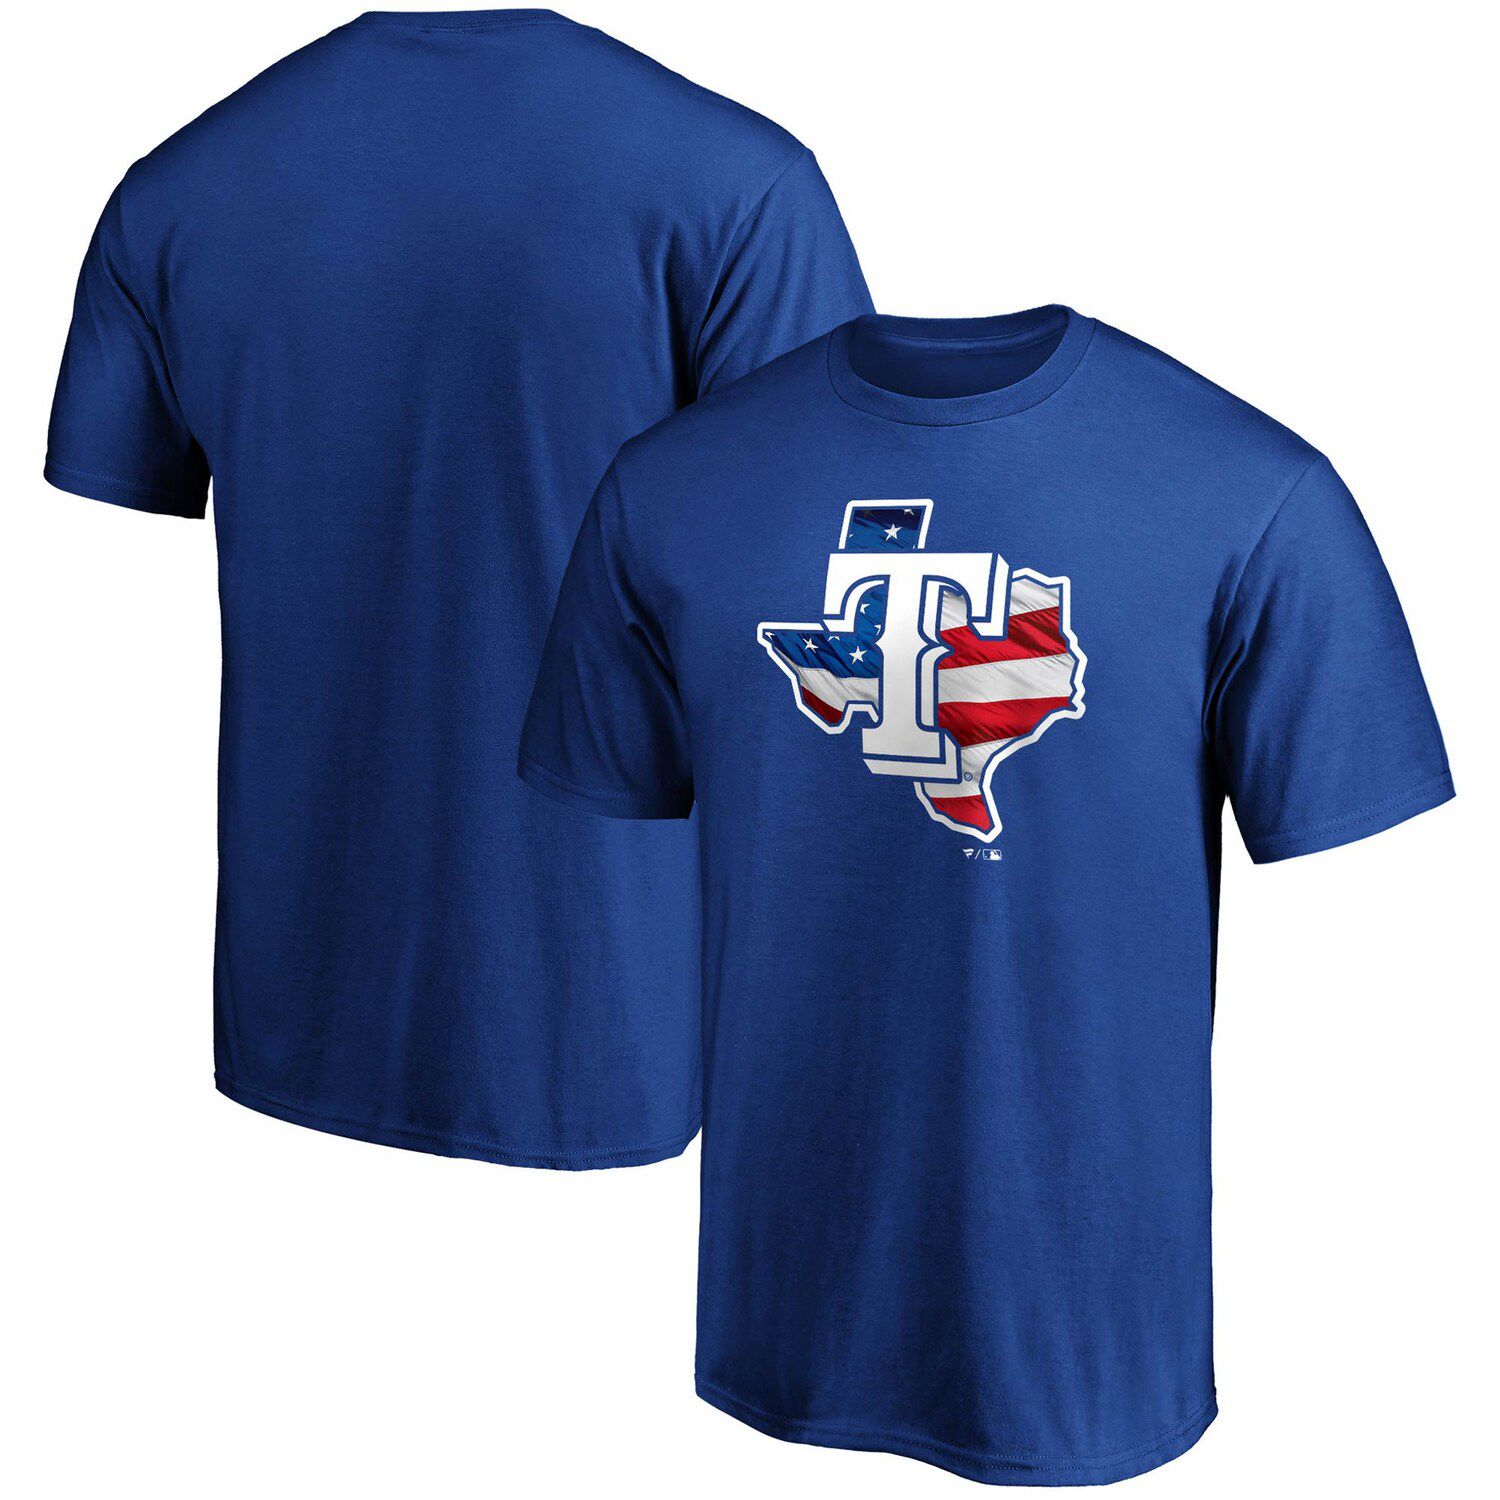 where to buy texas rangers shirts